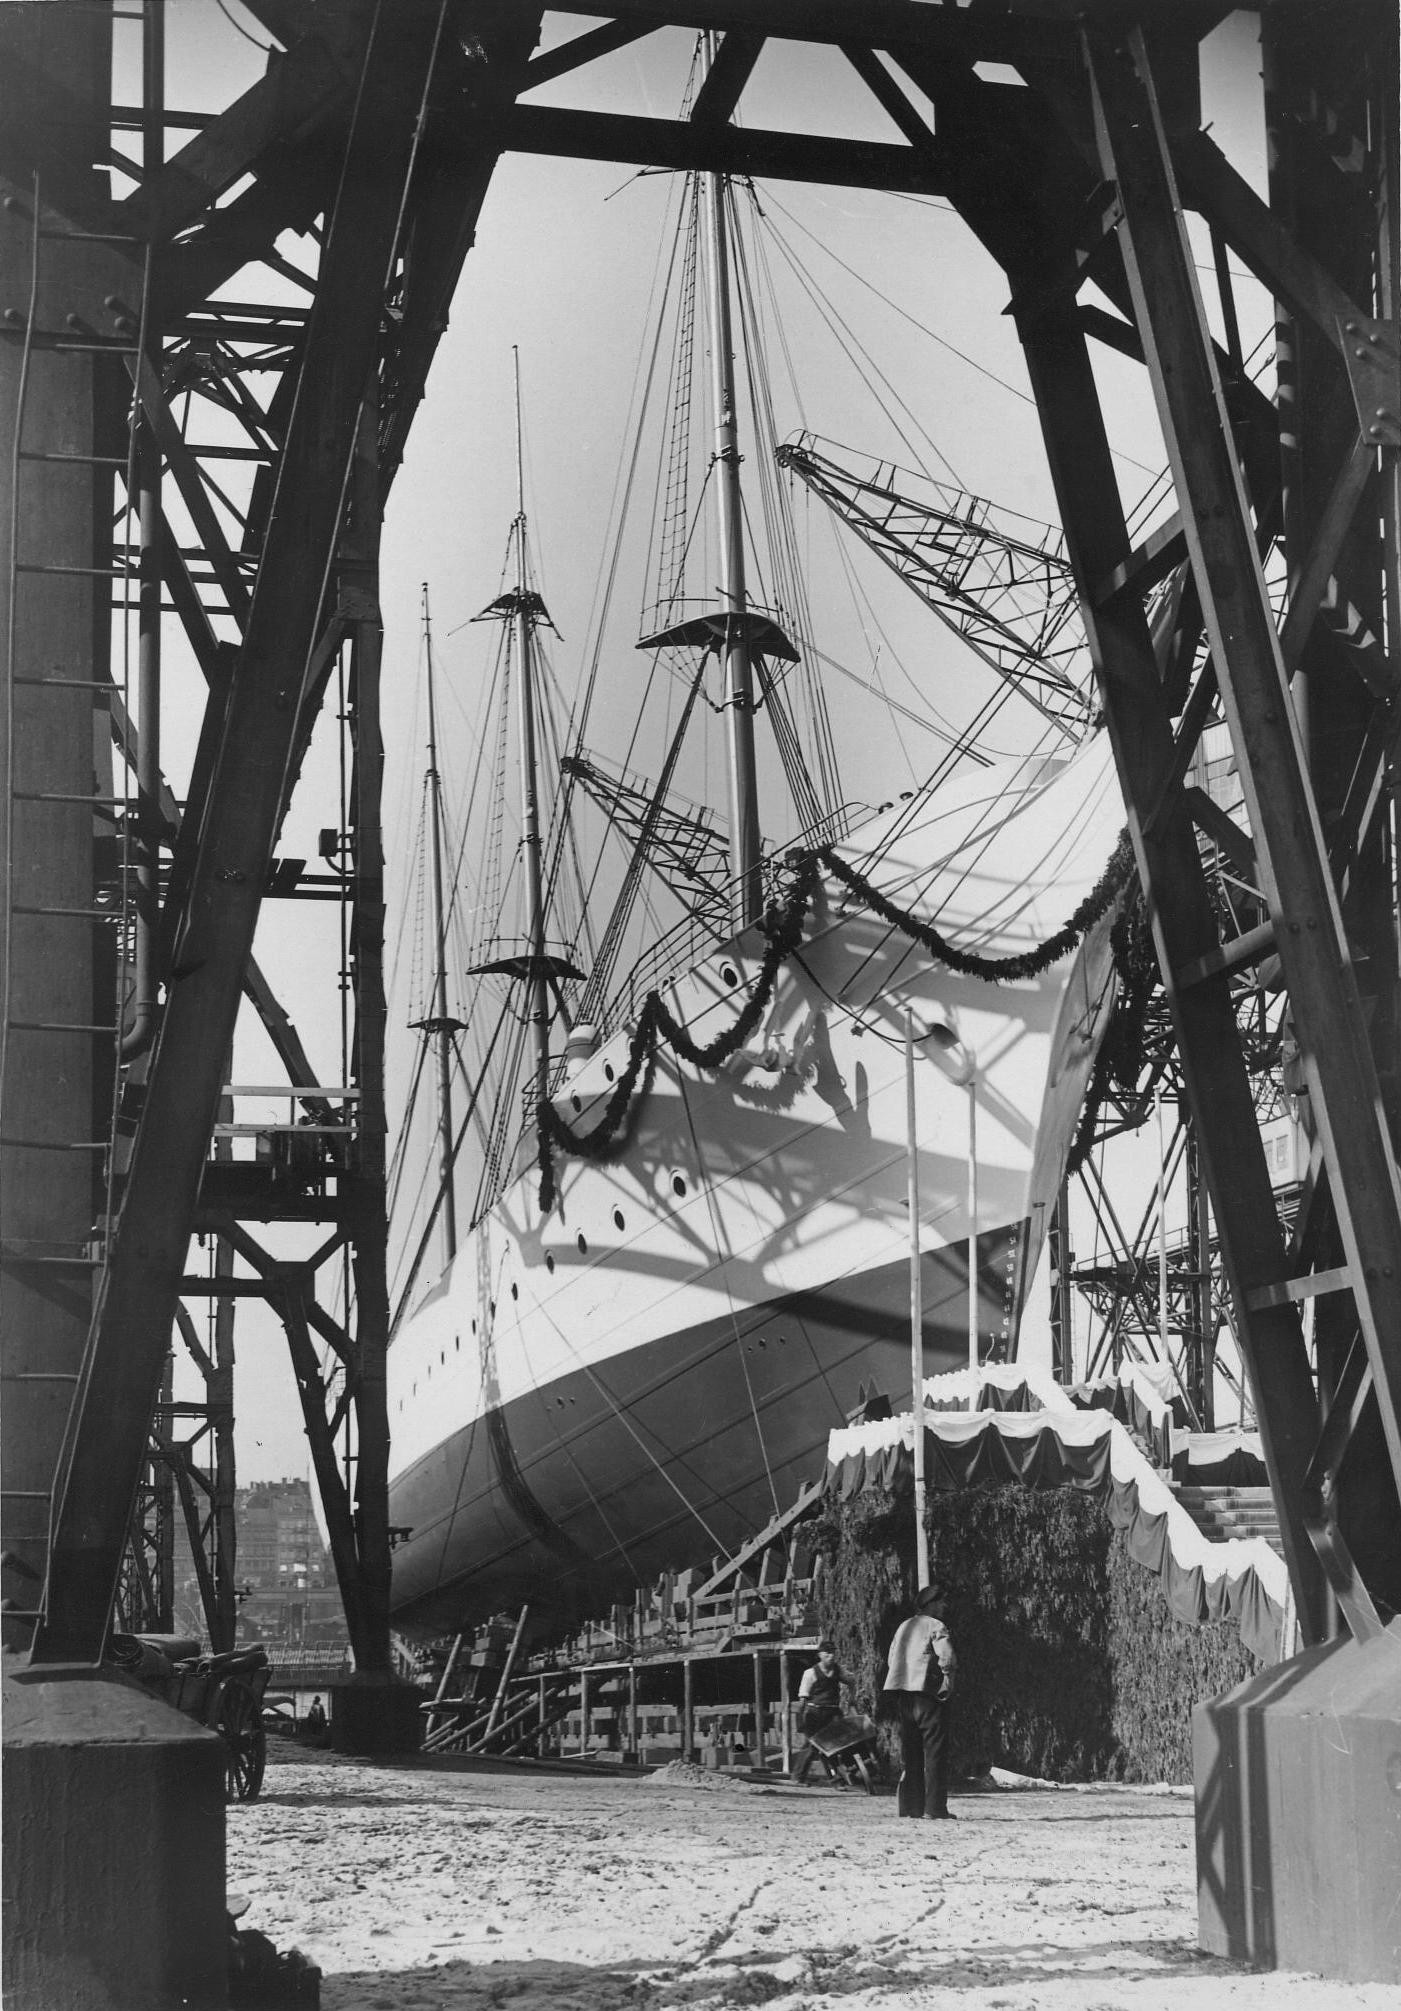 Launching of Horst Wessel, Blohm und Voss shipyard, Hamburg, Germany, 13 Jun 1936